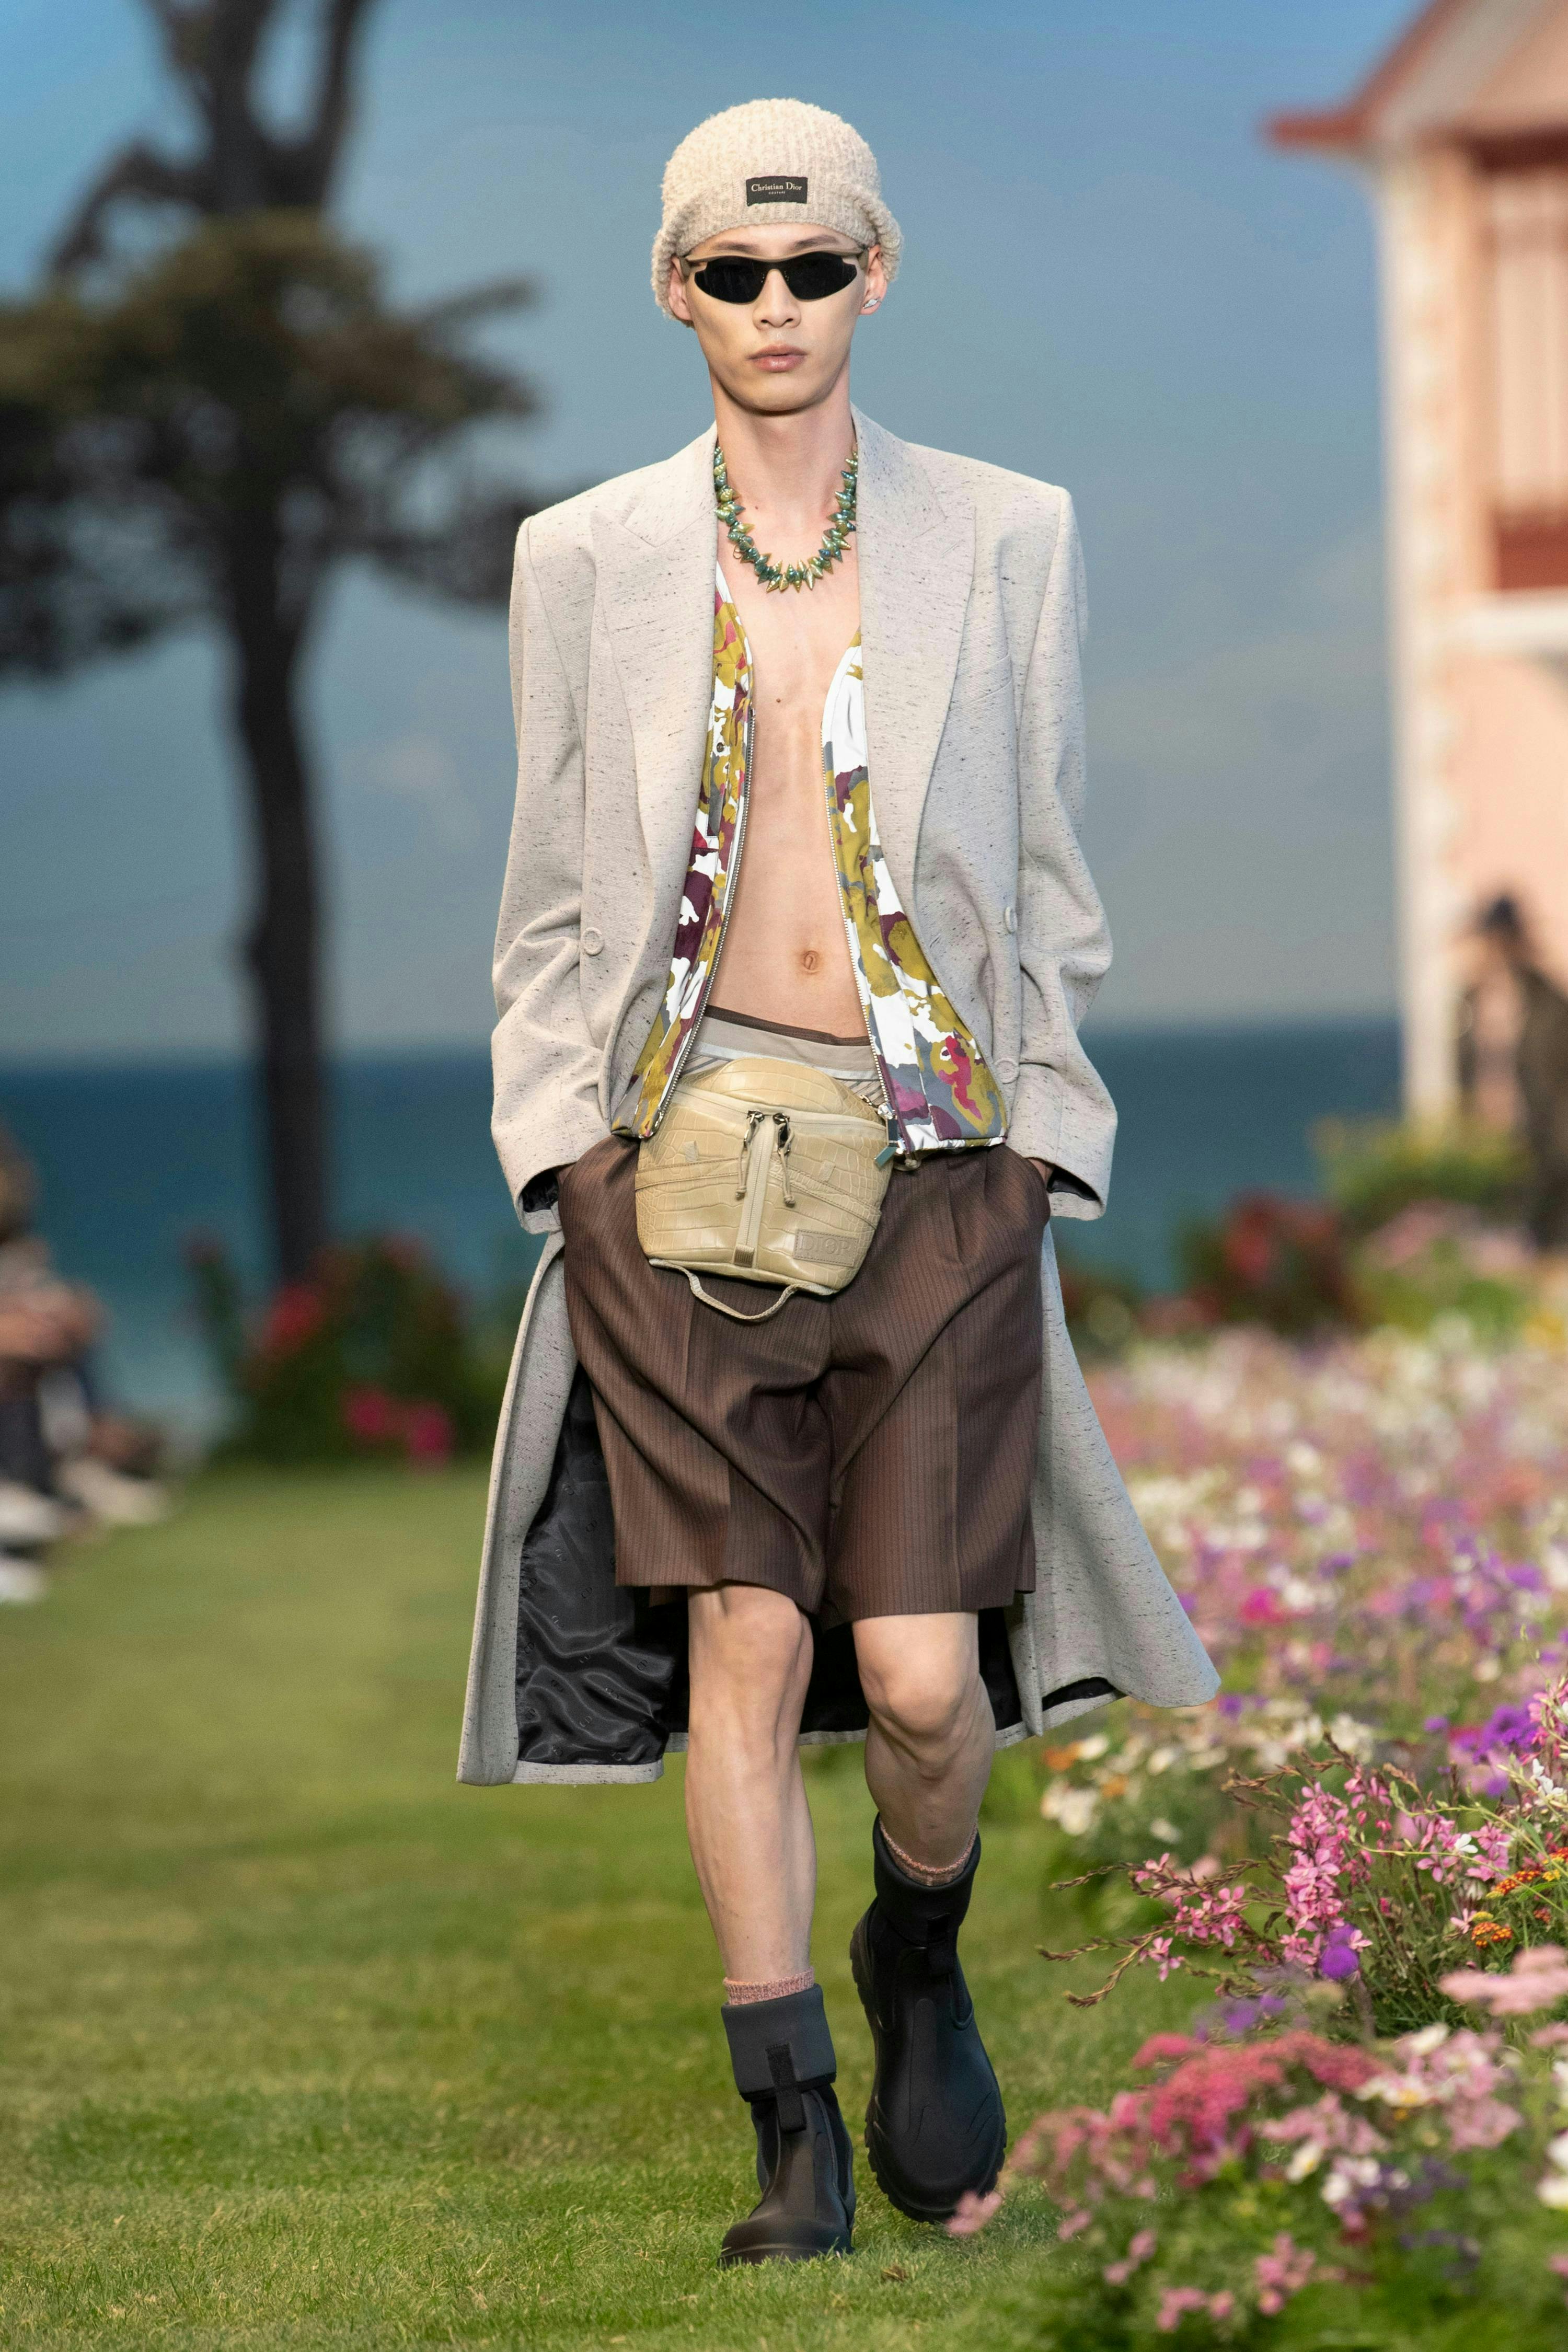 clothing apparel person human skirt sunglasses accessories accessory tartan plaid